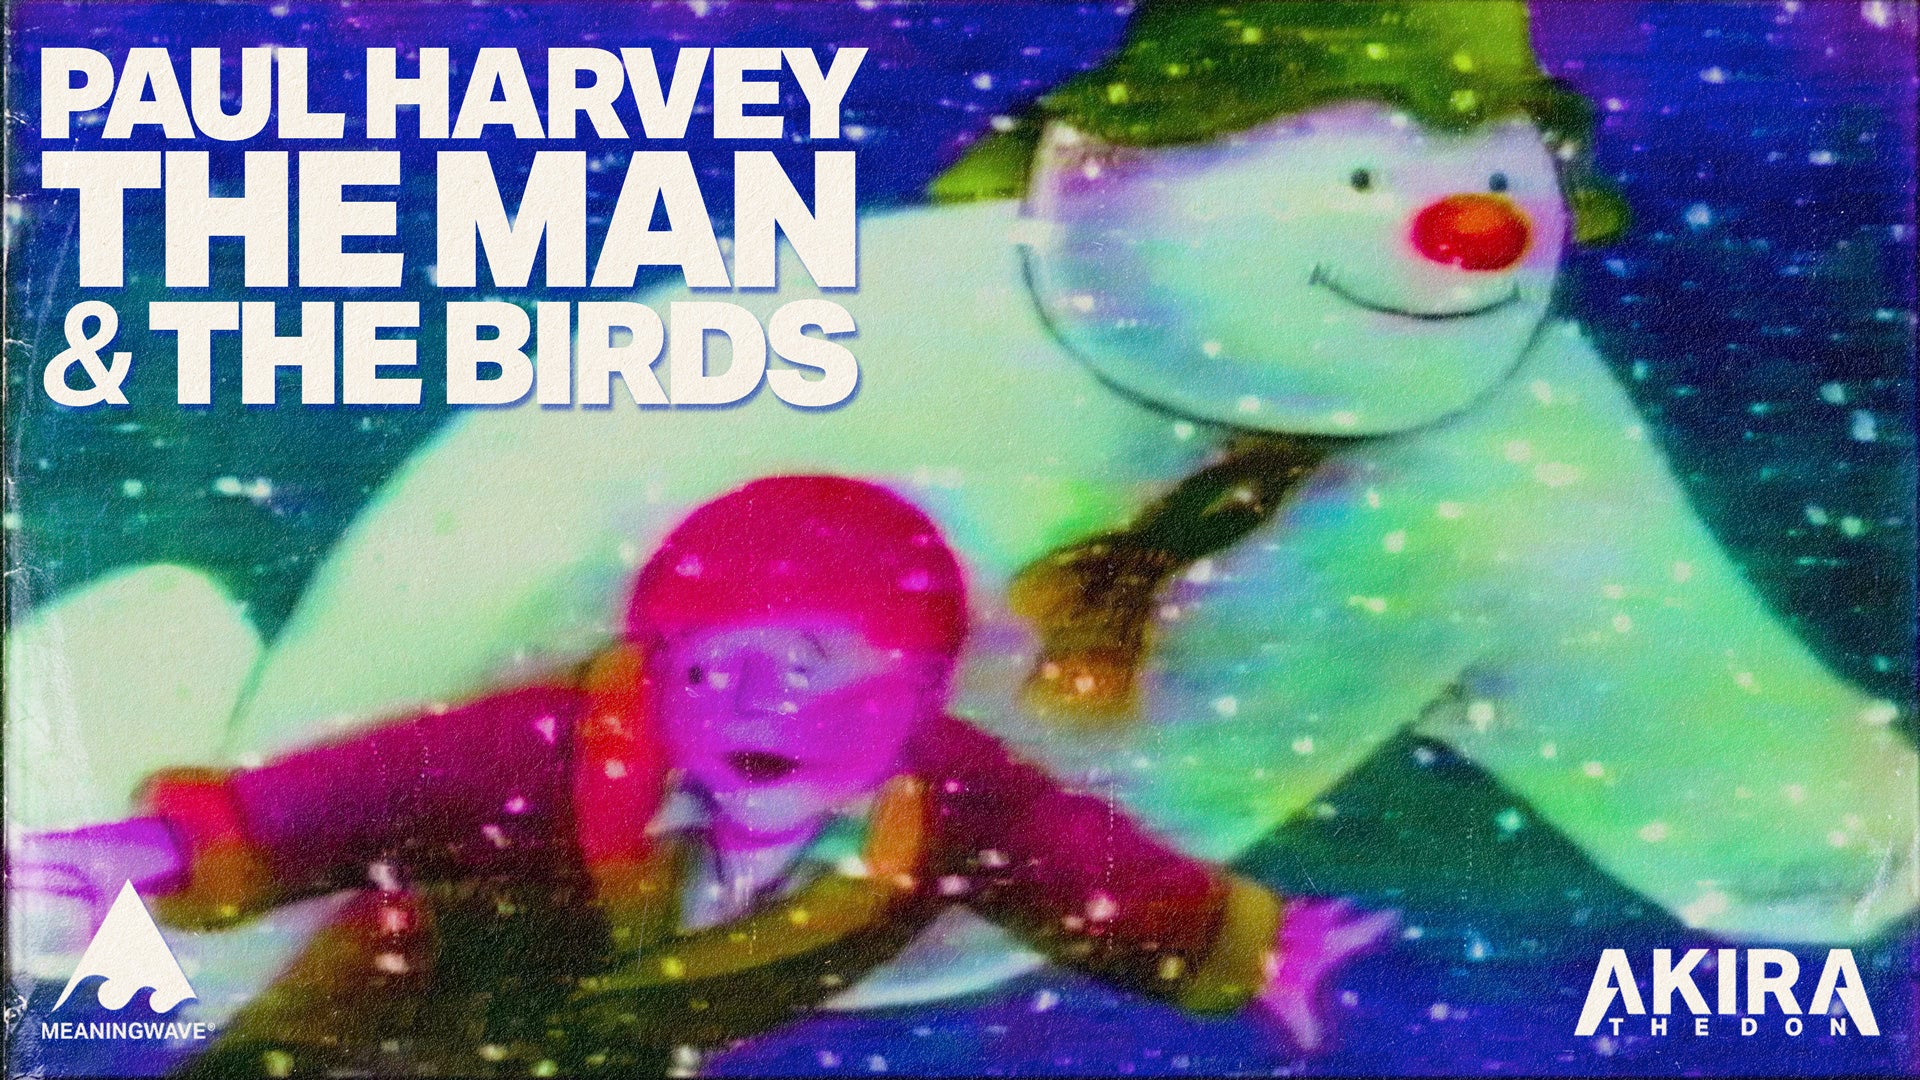 Paul Harvey & Akira The Don - THE MAN & THE BIRDS (Remaster) | Music Video